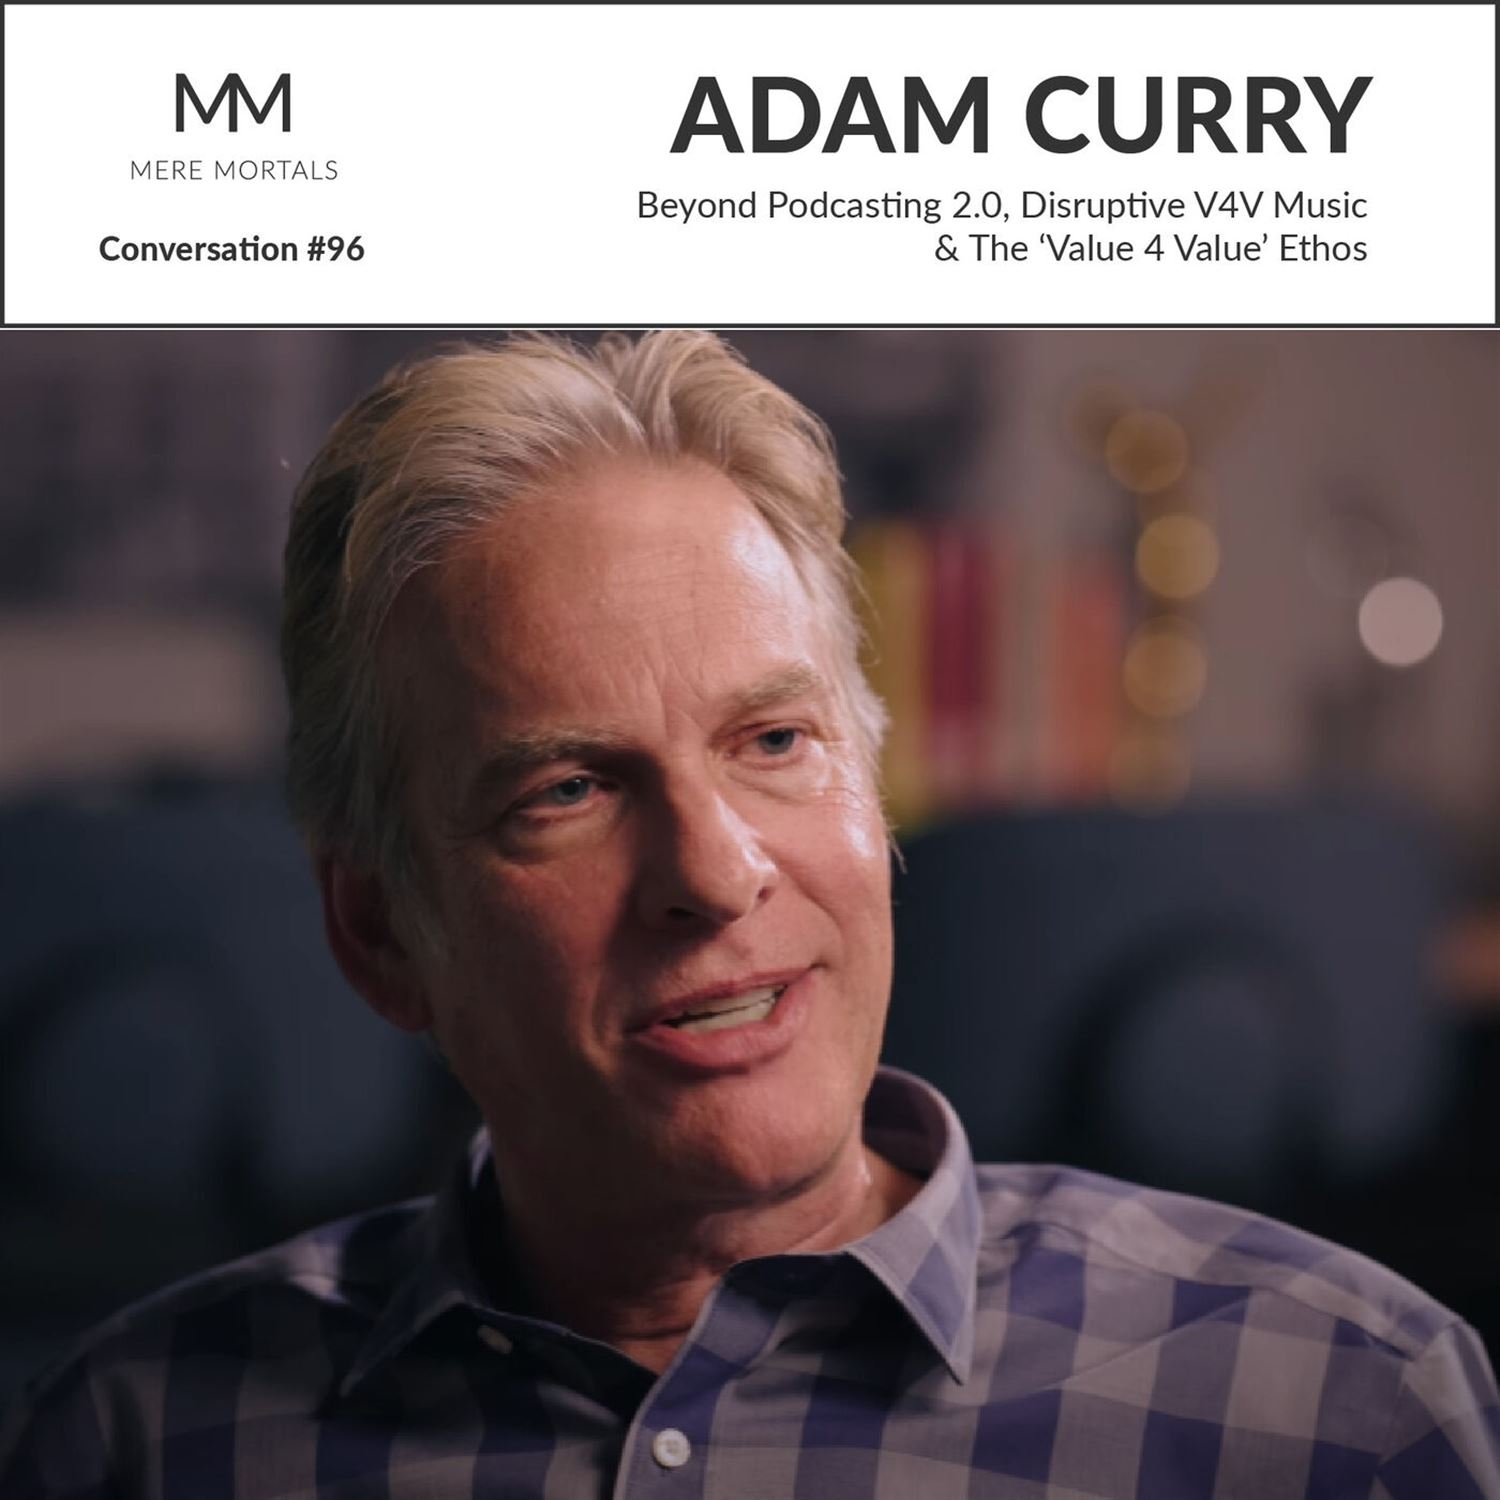 ADAM CURRY | Beyond Podcasting 2.0, Disruptive V4V Music & The 'Value 4 Value' Ethos